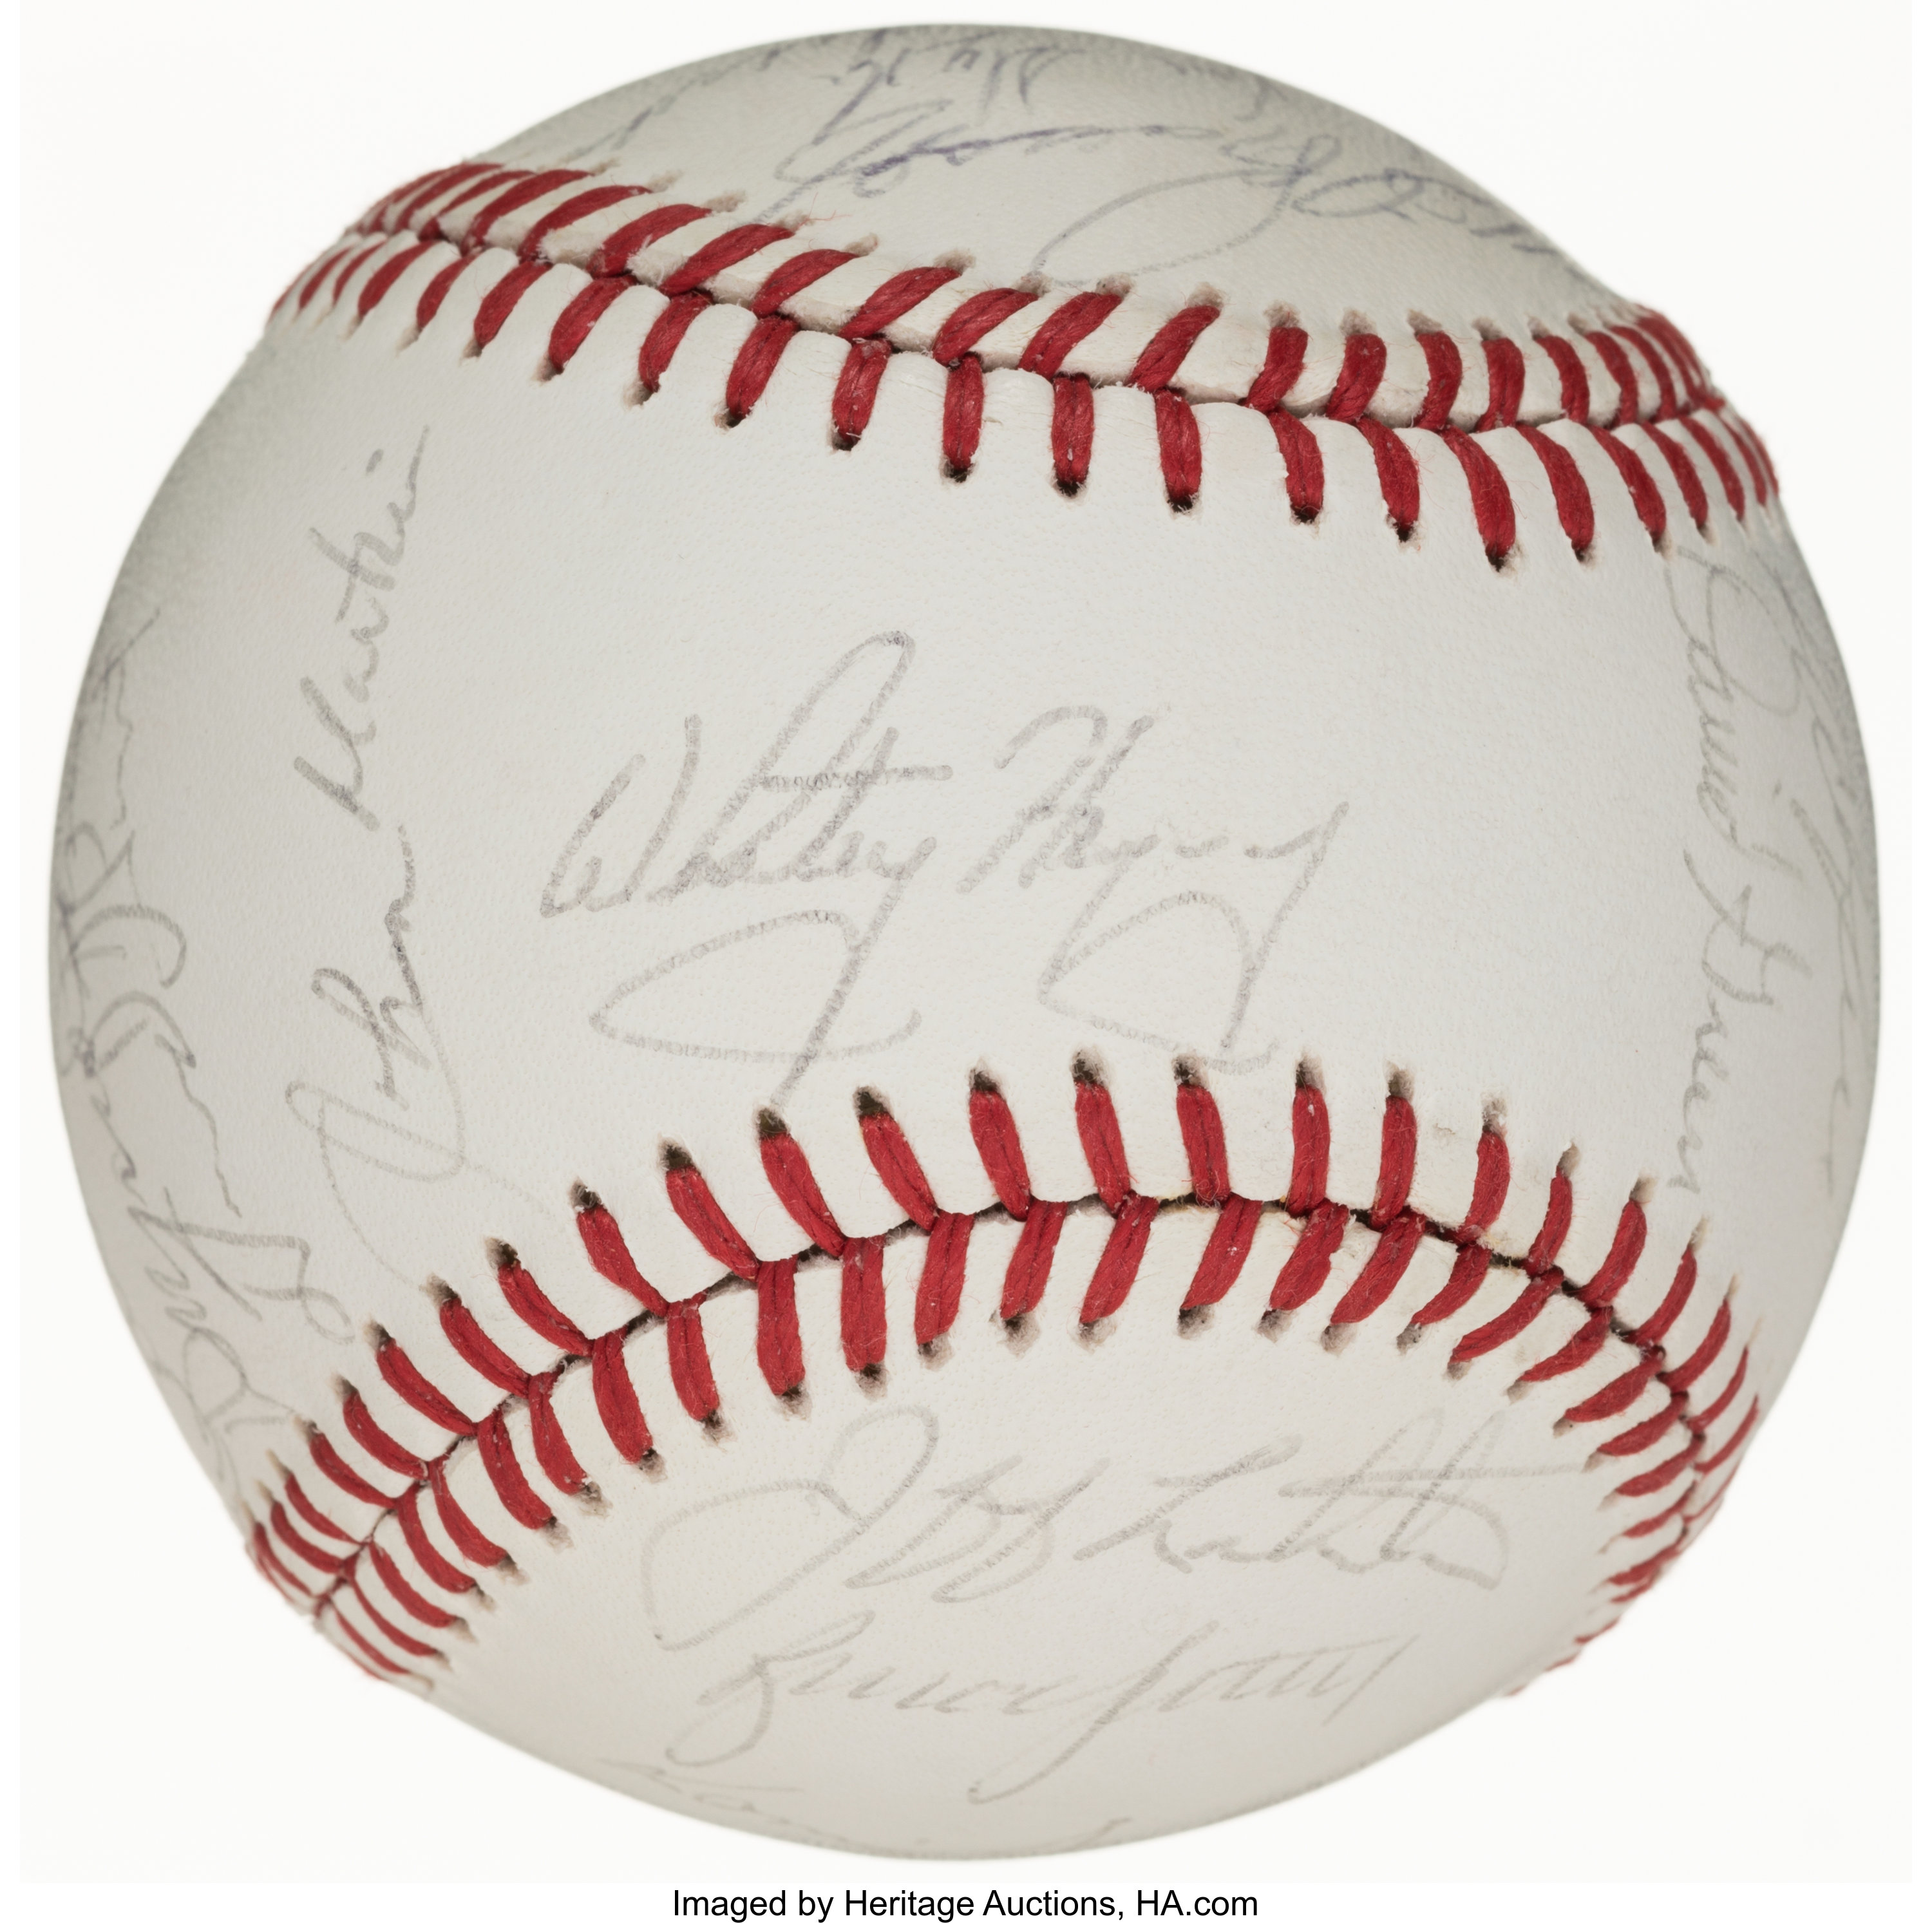 St. Louis Cardinals Whitey Herzog Autographed Baseball with HOF